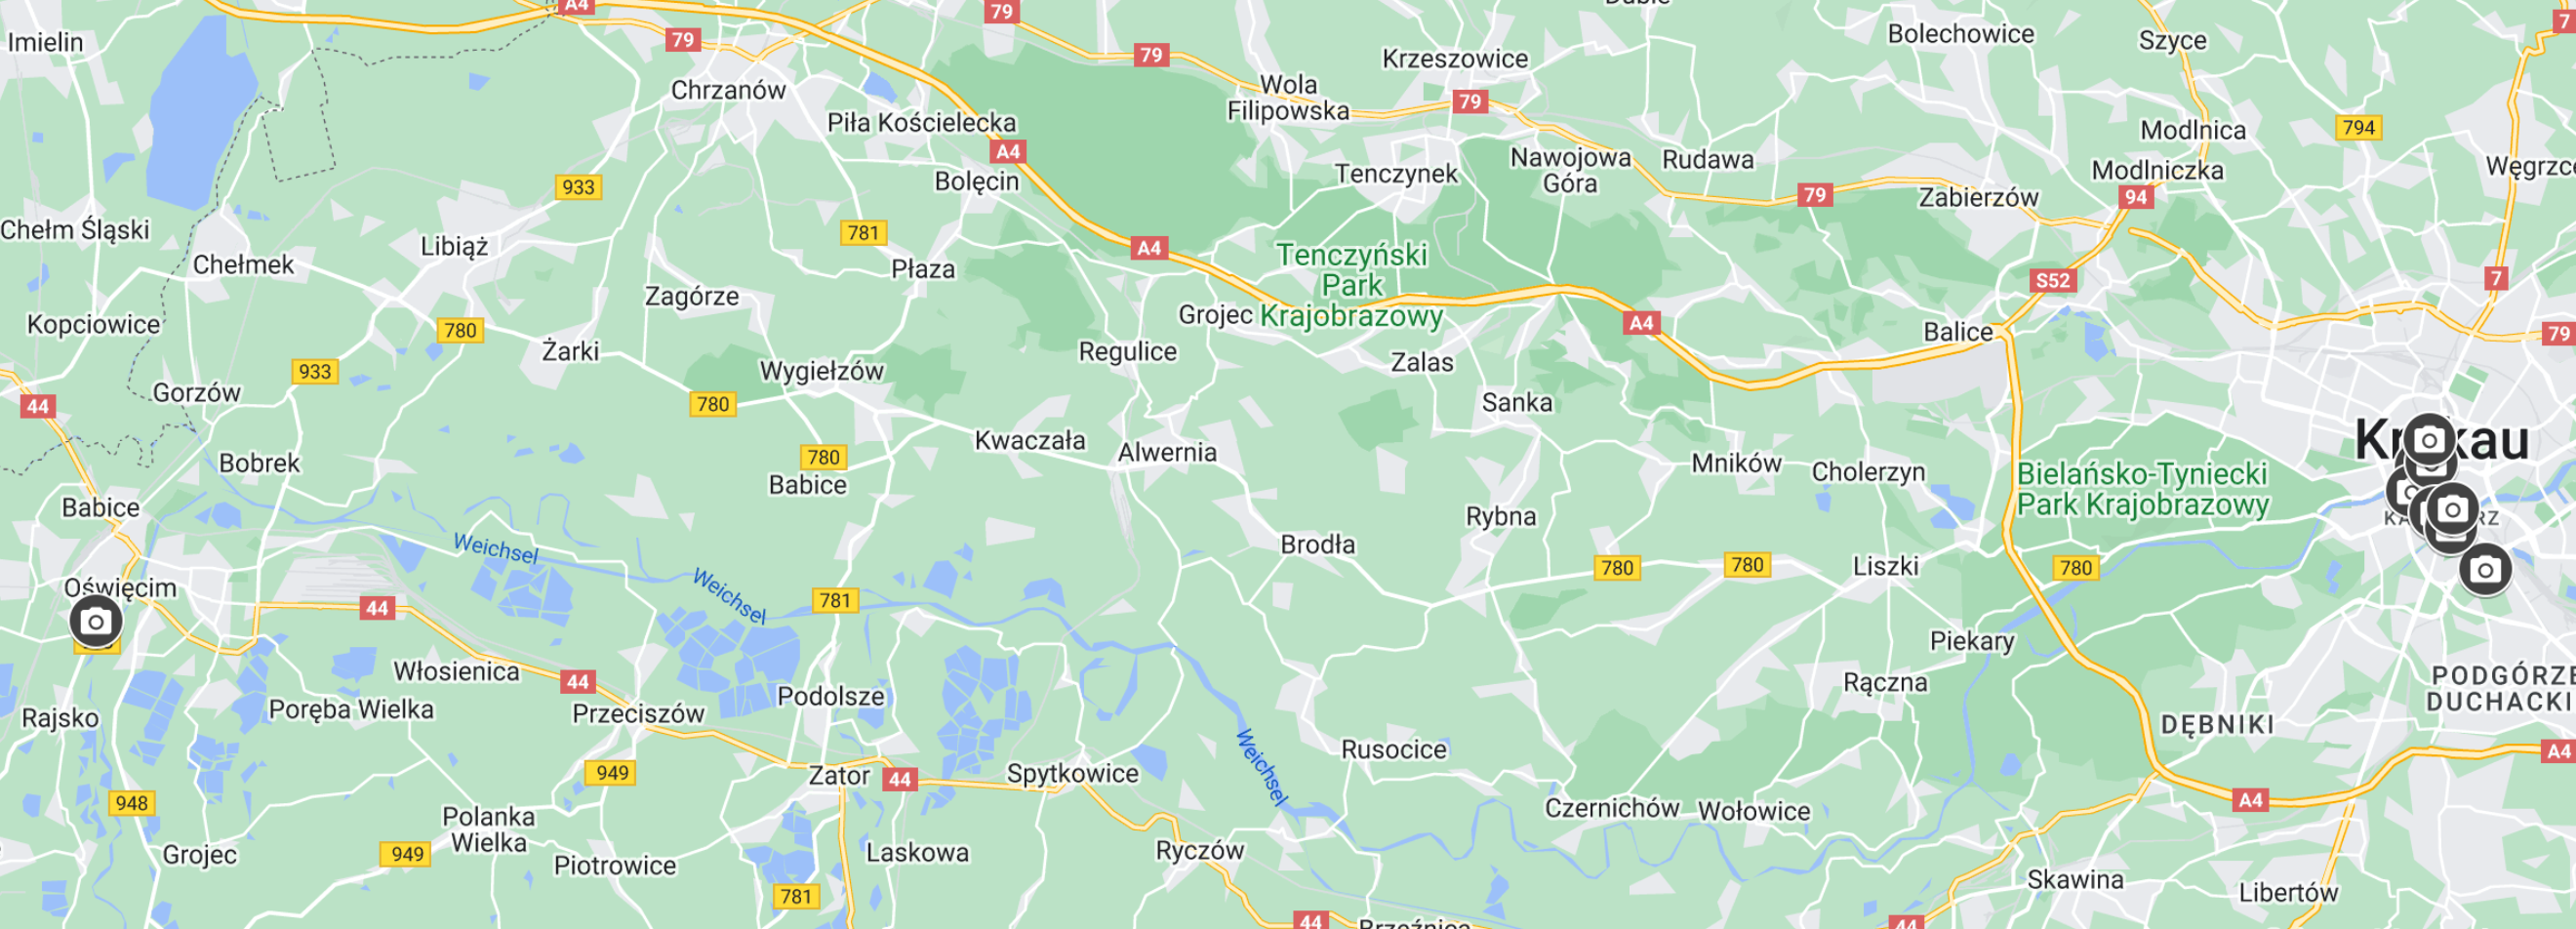 Google Maps Krakow Poland